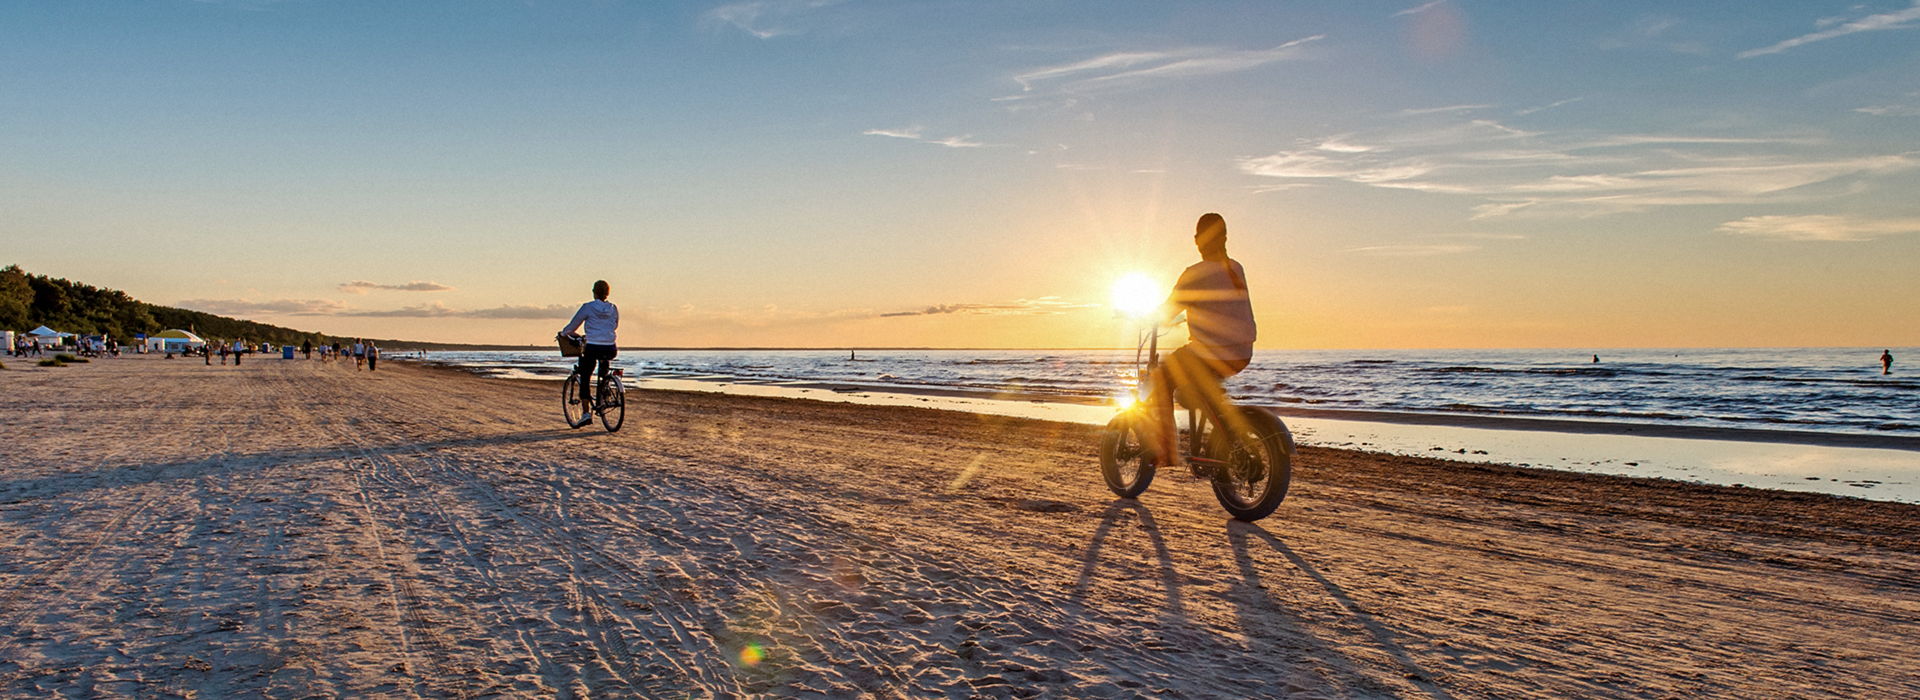 Cyclists riding TurboAnt bikes on a beach